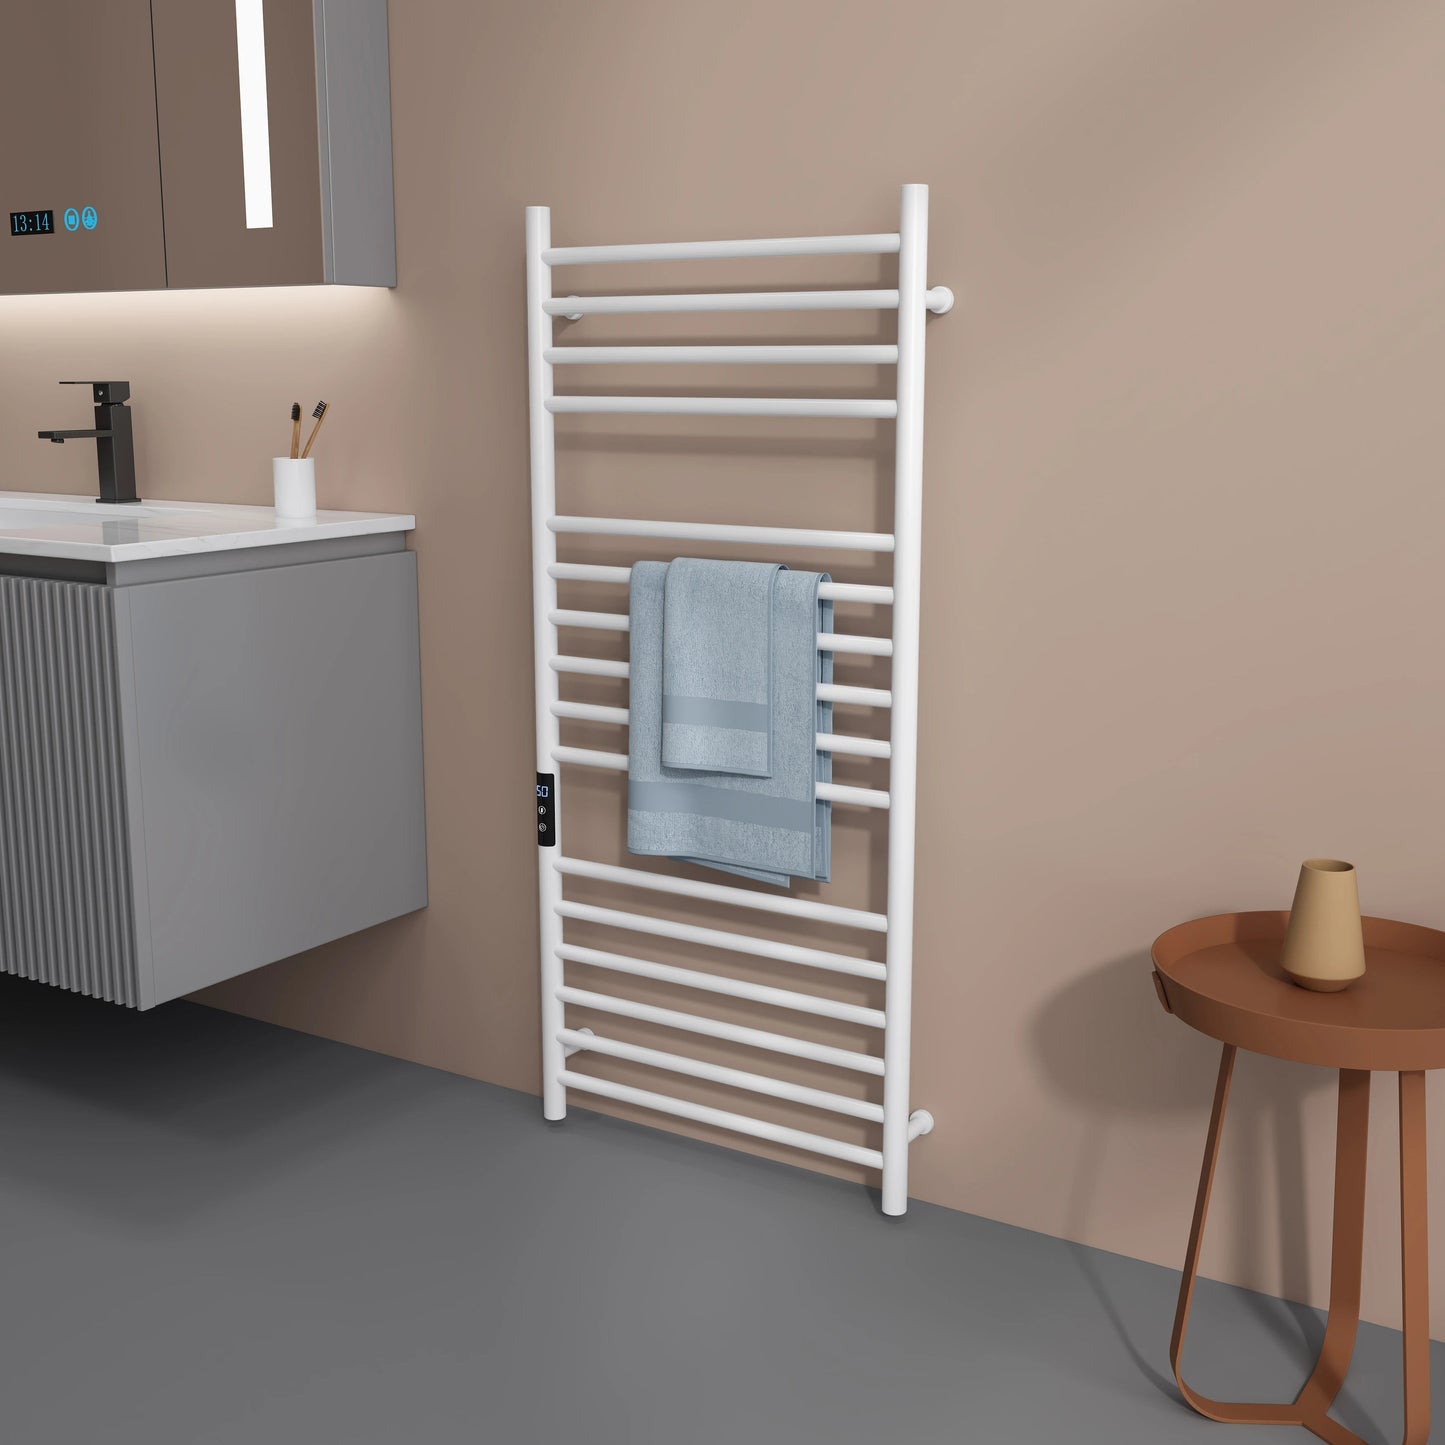 Xiaomi Electric Towel Rack Bathroom Equipment Stainless Steel Temperature &Time Control Smart Heated Towel Rail Towel Warmer